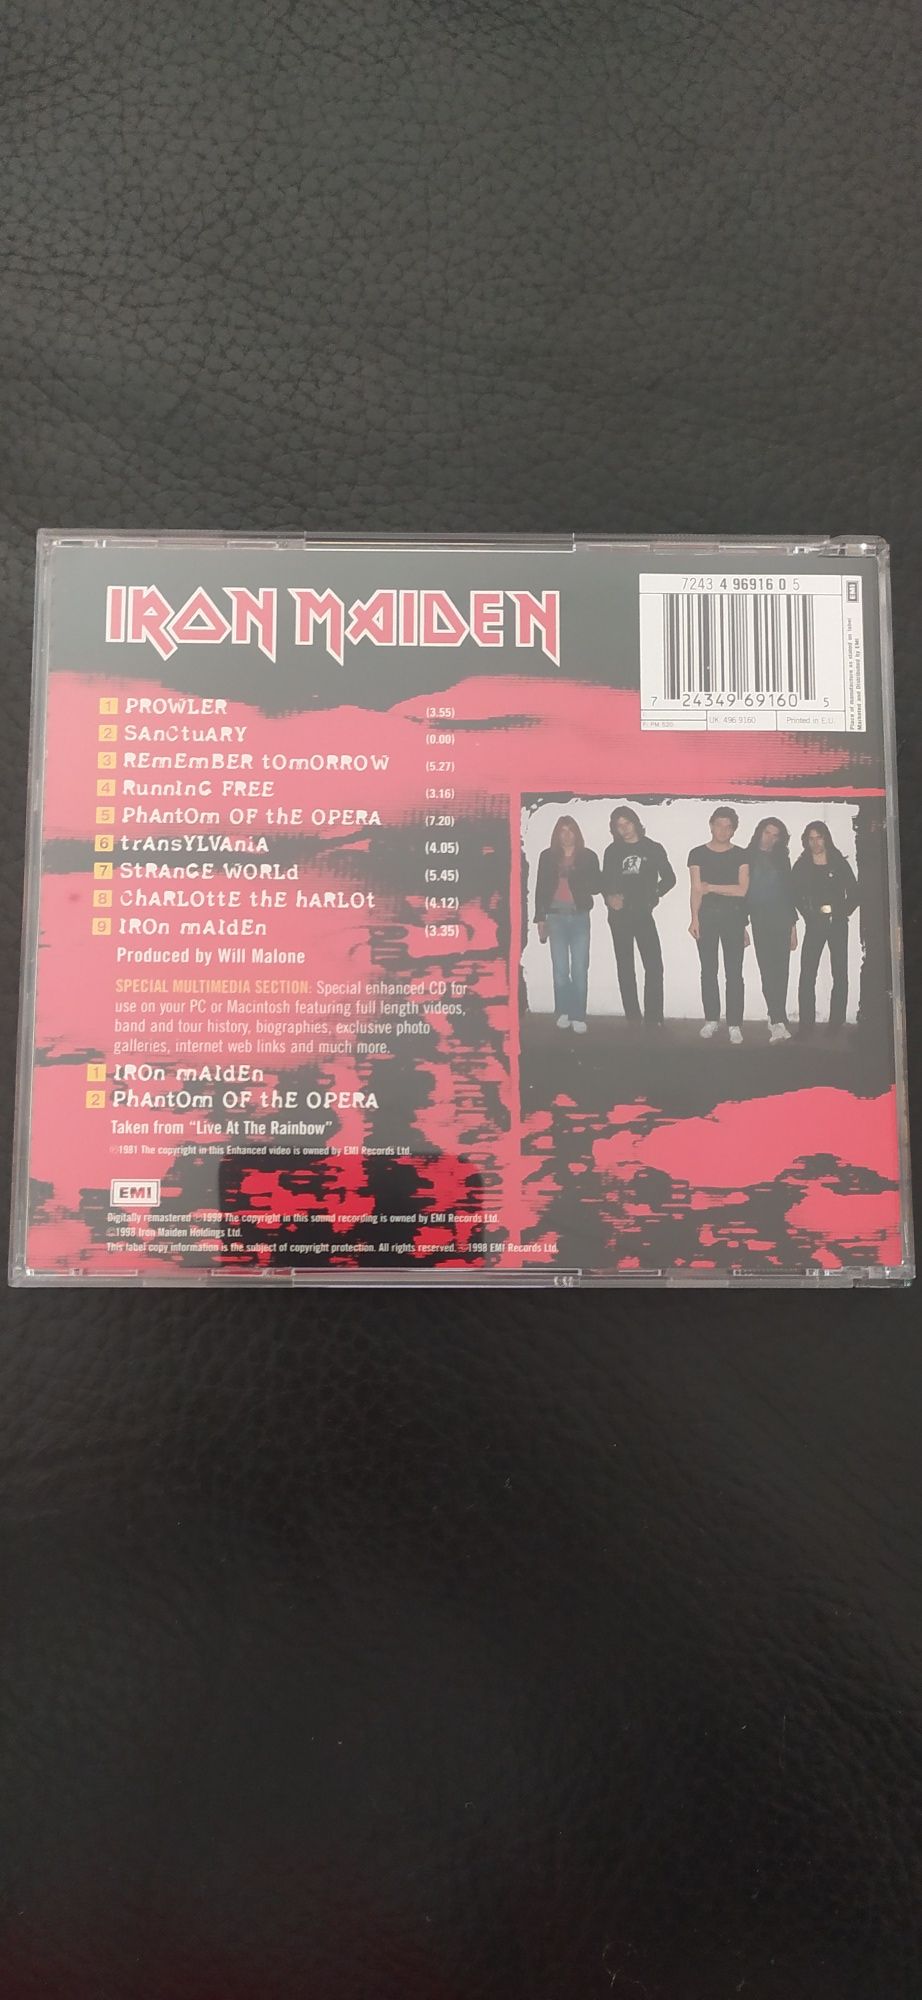 Iron maiden CD enhanced